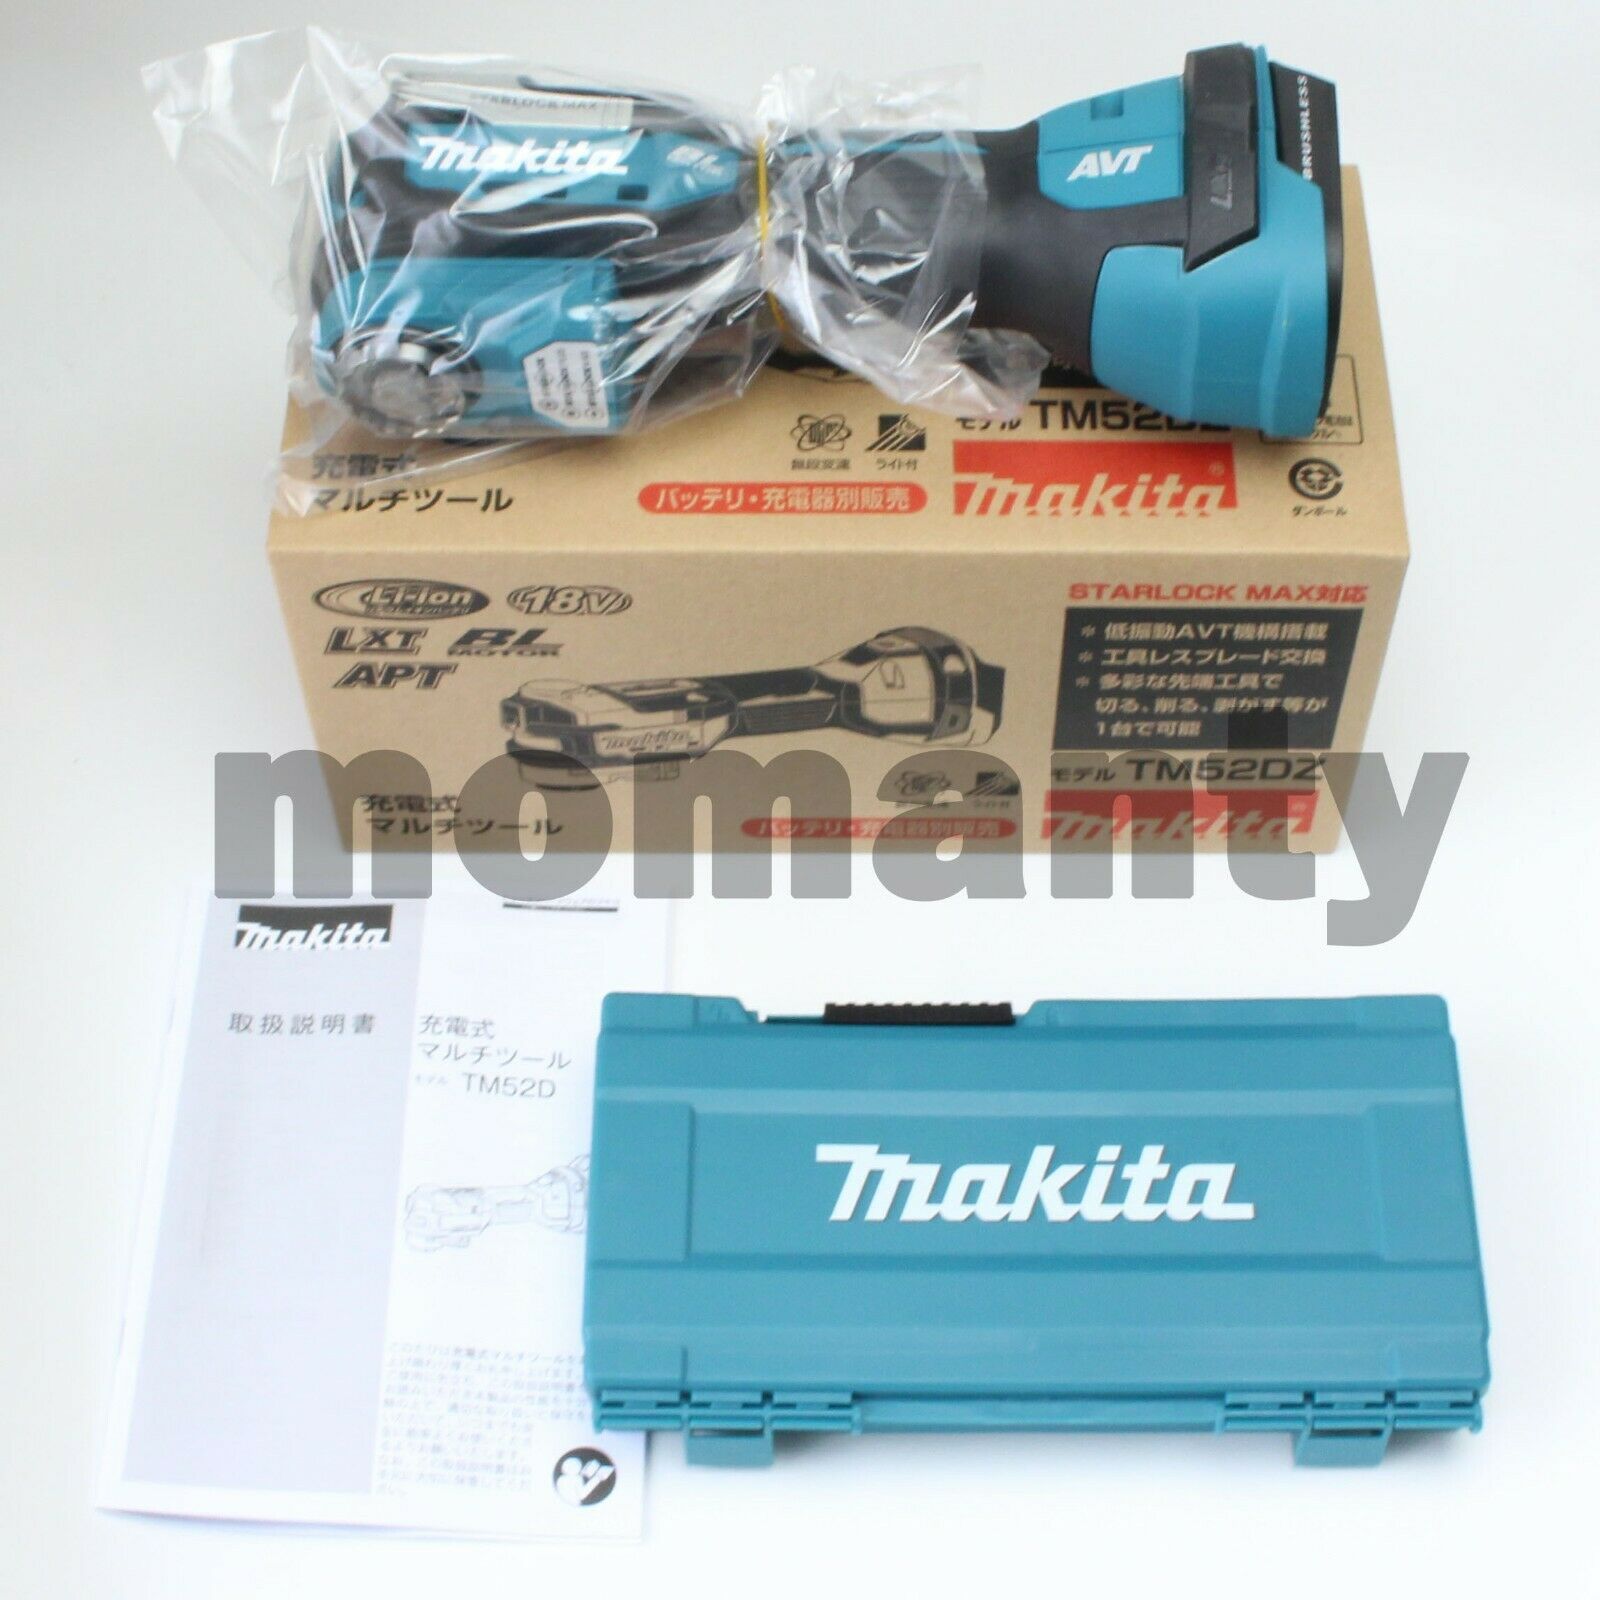 Makita TM52DZ TM 52 DZ 18V rechargeable multi-tool Body only.